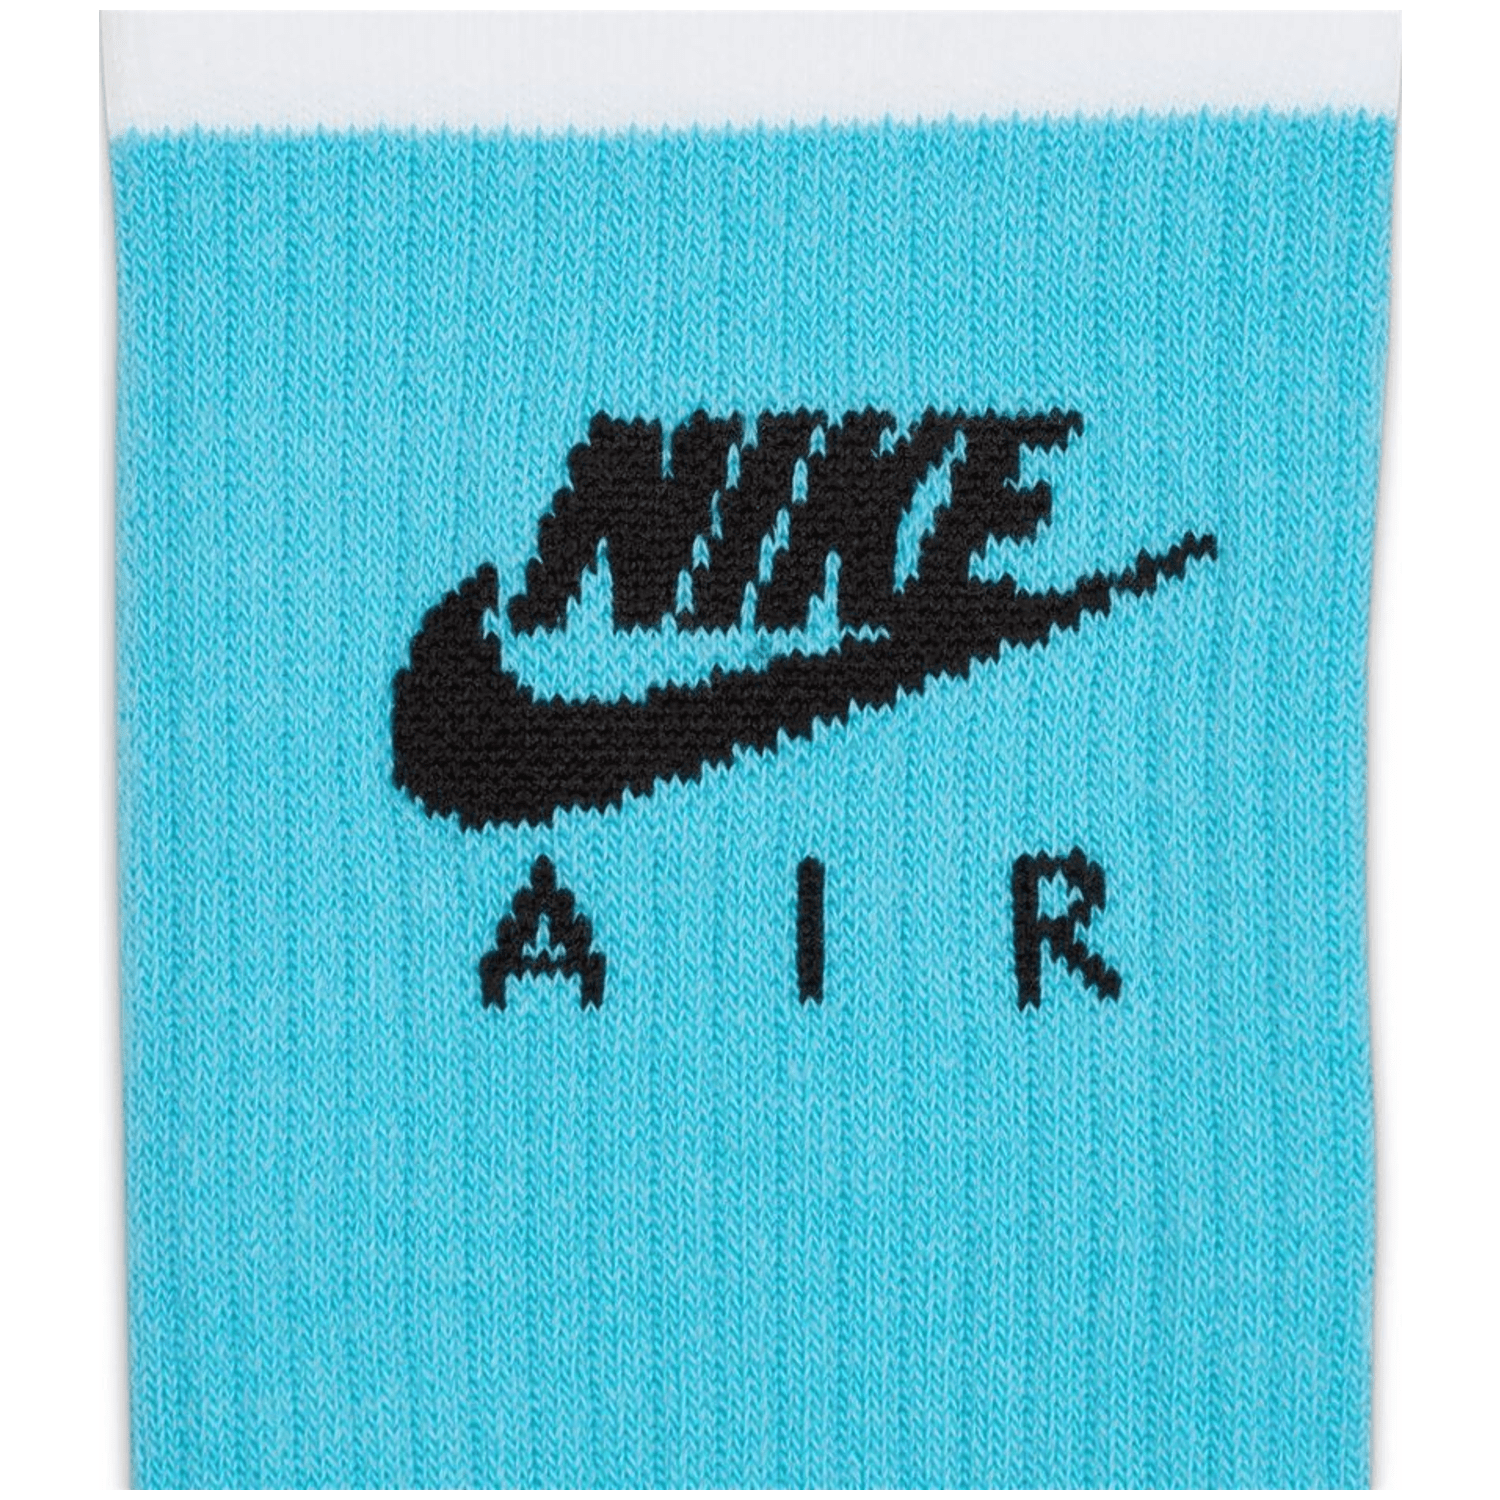 Nike Everyday Essential Crew Unisex Socken